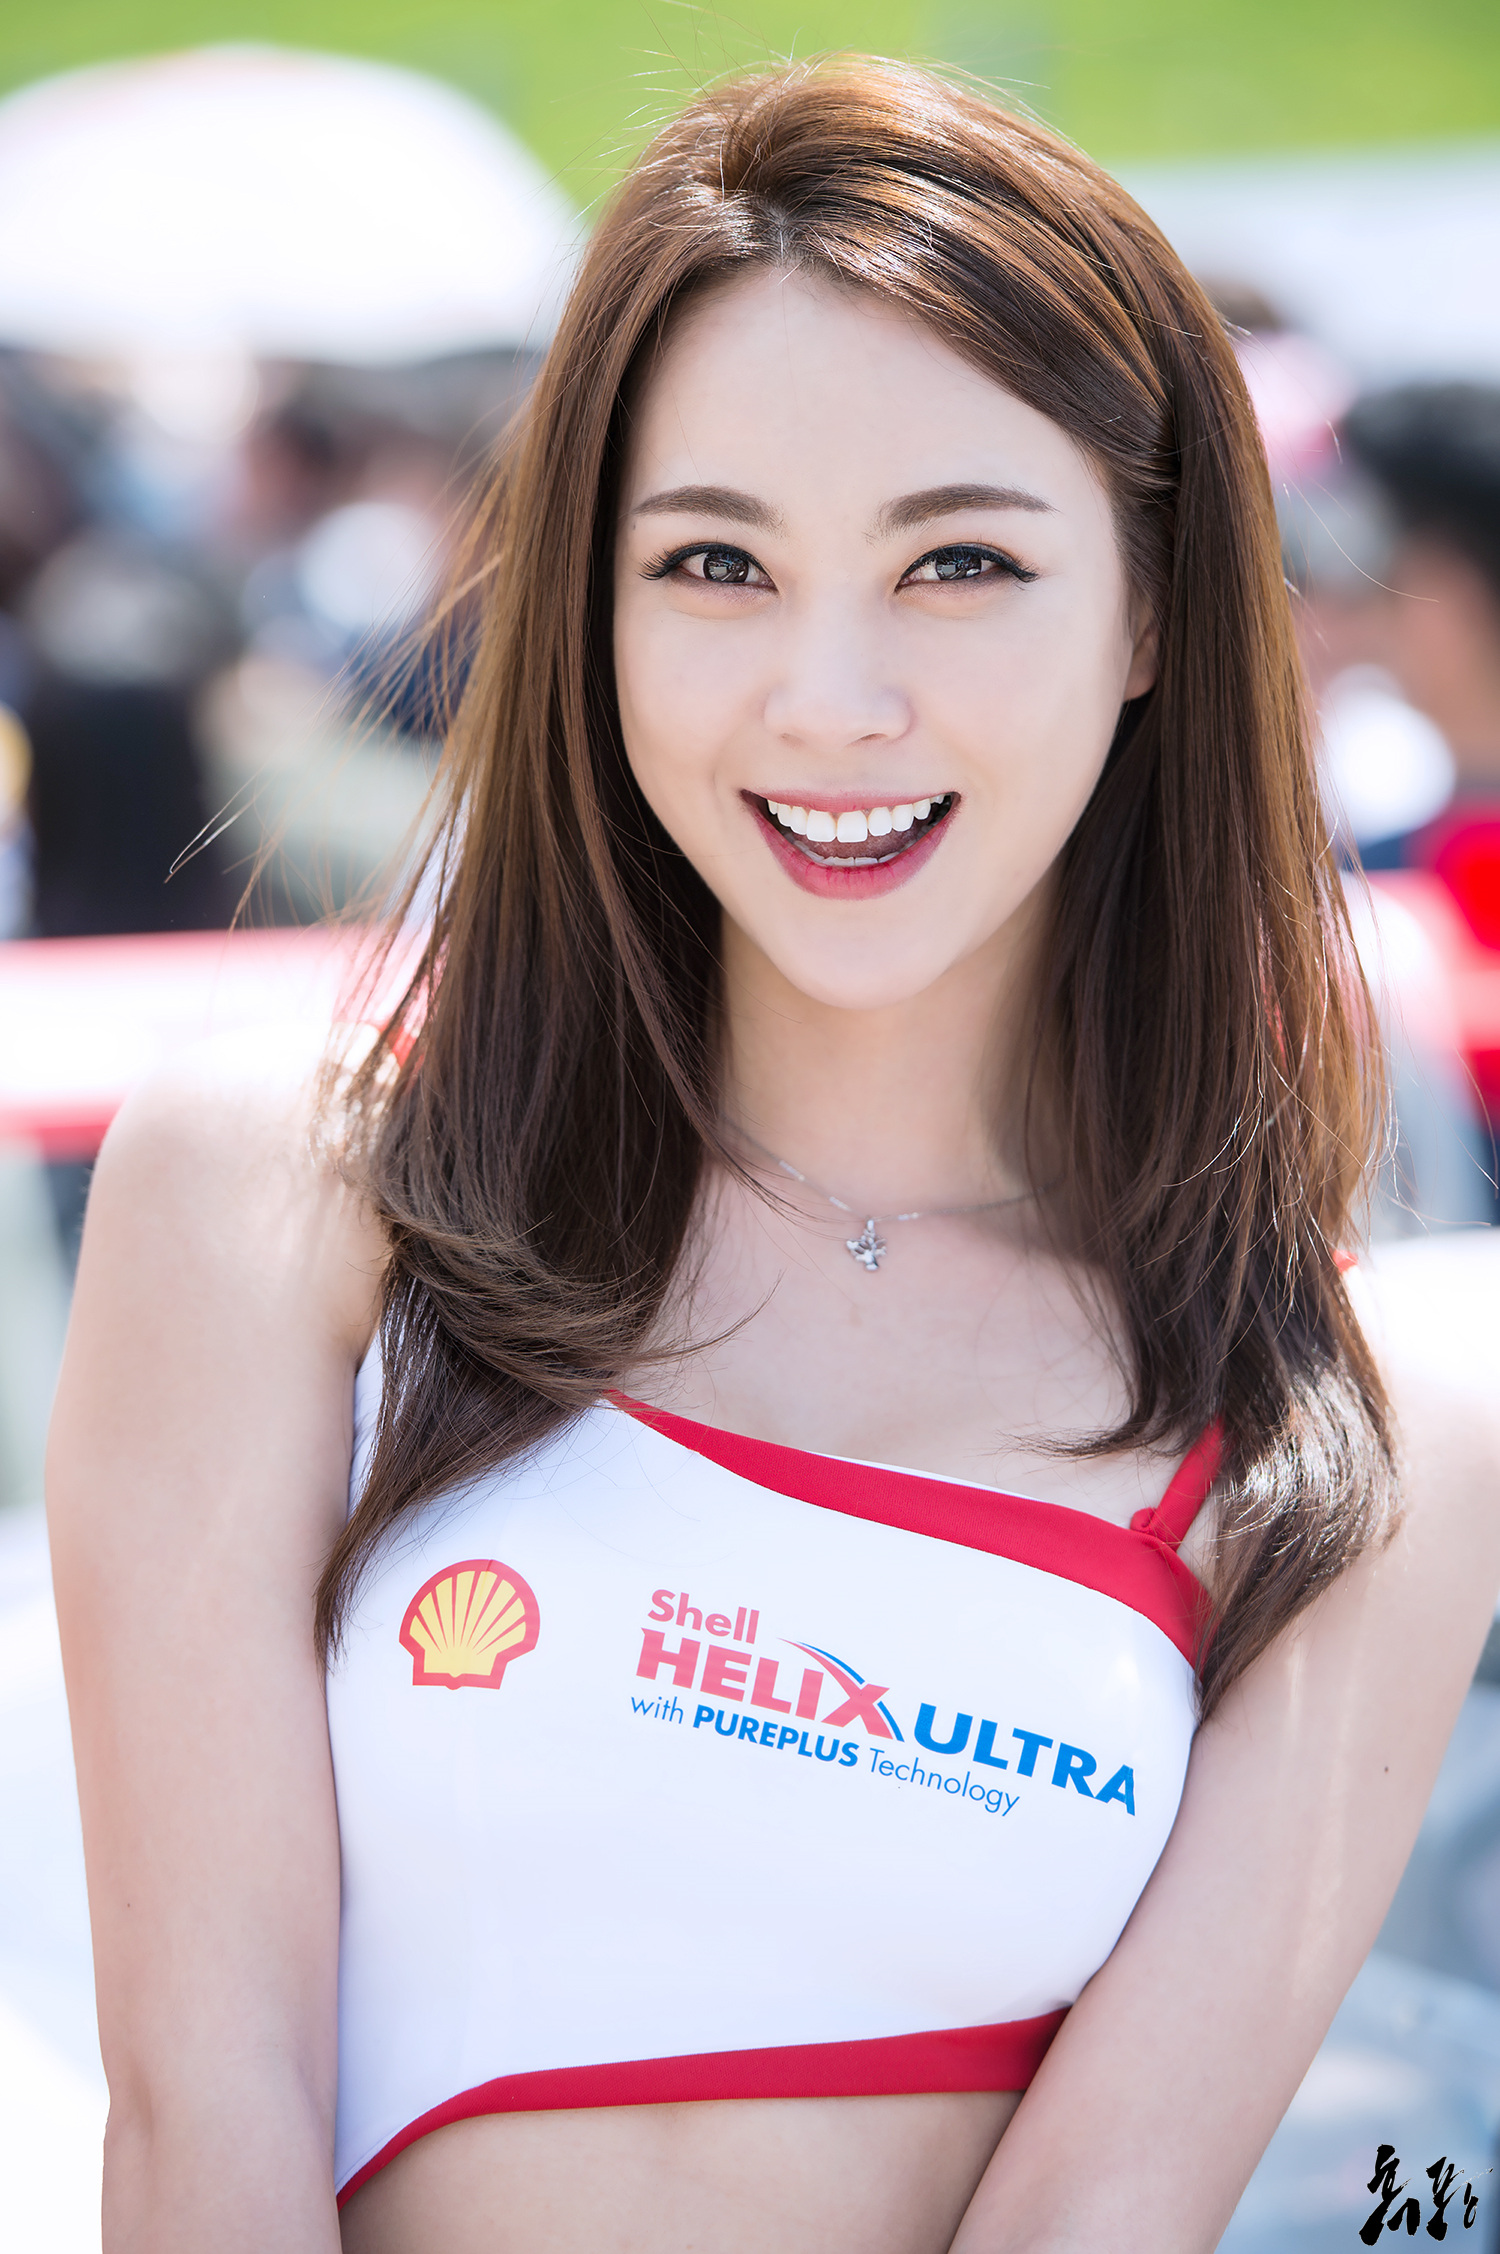 Ju Da Ha Super Race 2016 Round 1 Share Erotic Asian Girl Picture And Livestream